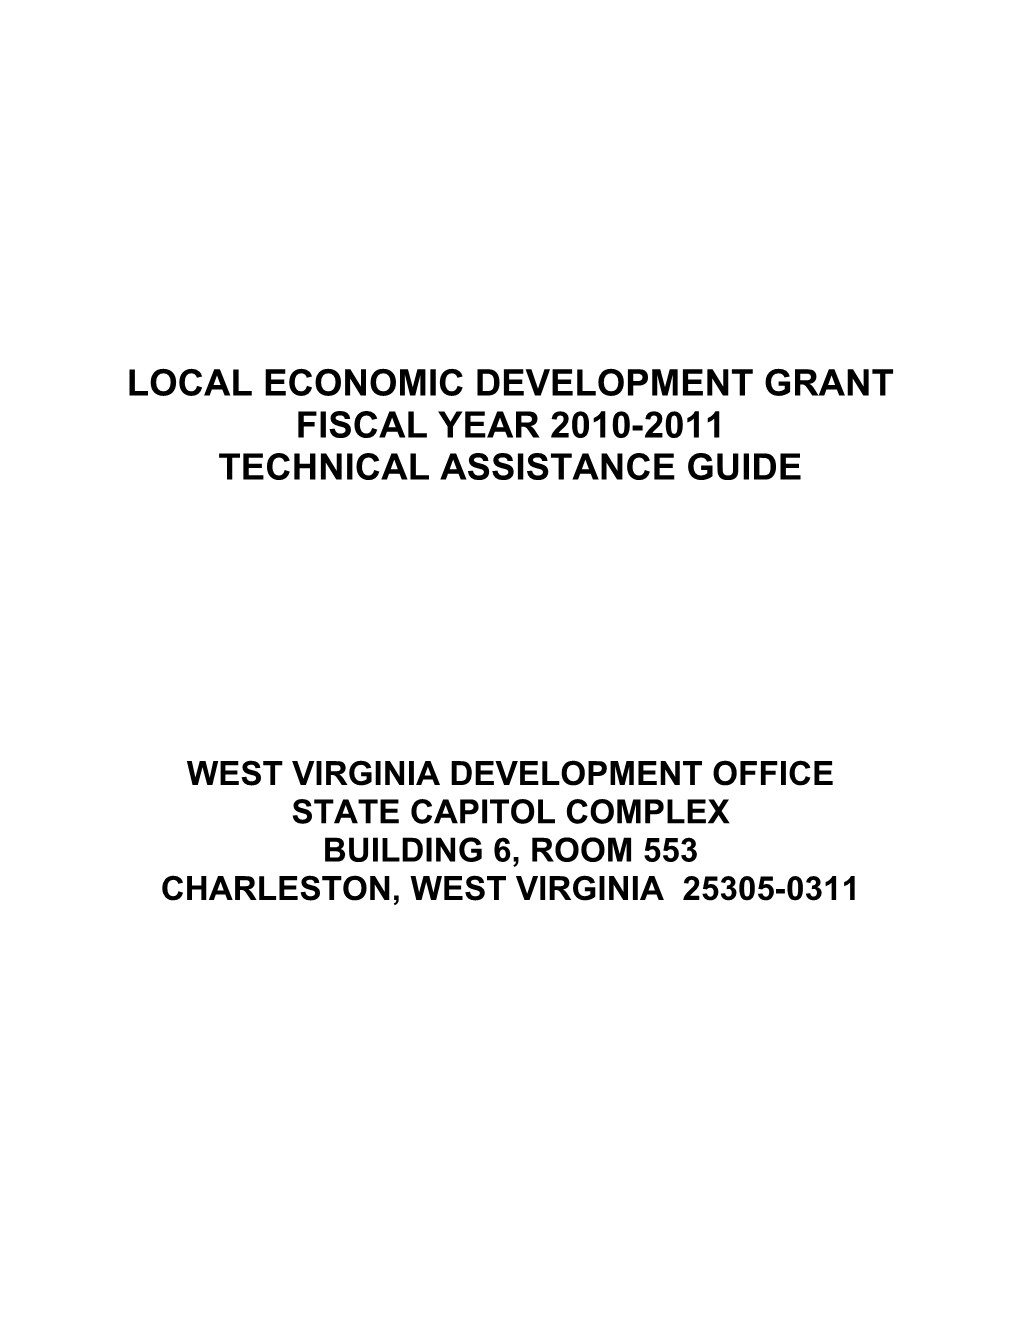 Local Economic Development Grant